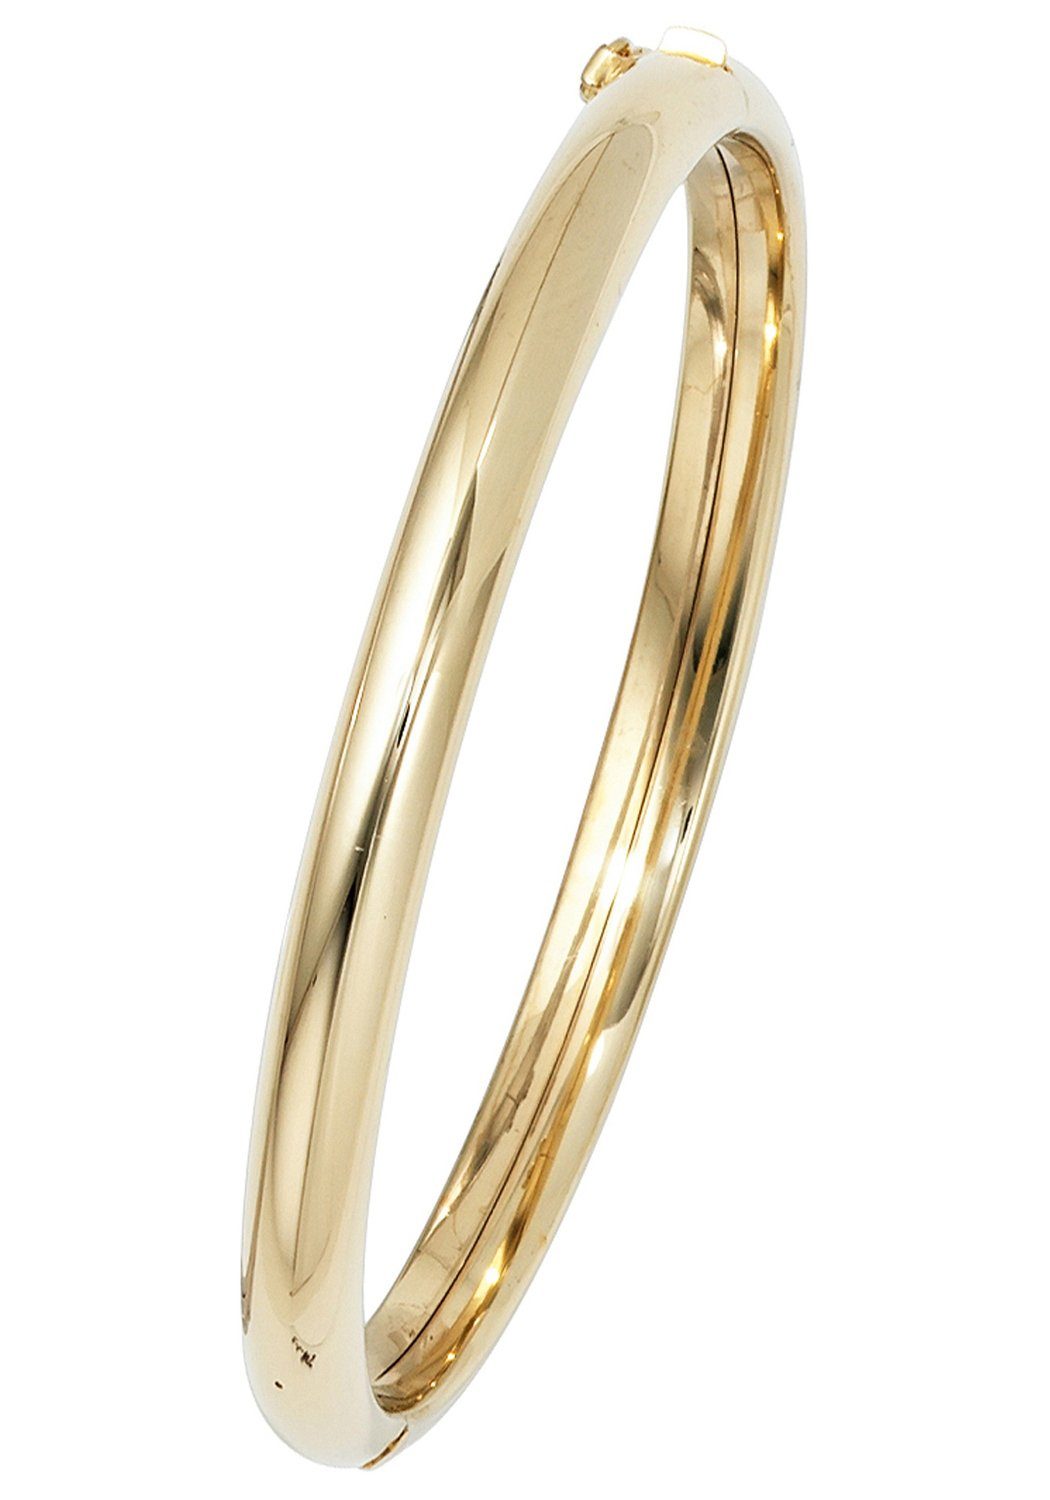 JOBO Armreif Armband oval, 585 Gold, Hochwertiger Armreif in ovaler Form